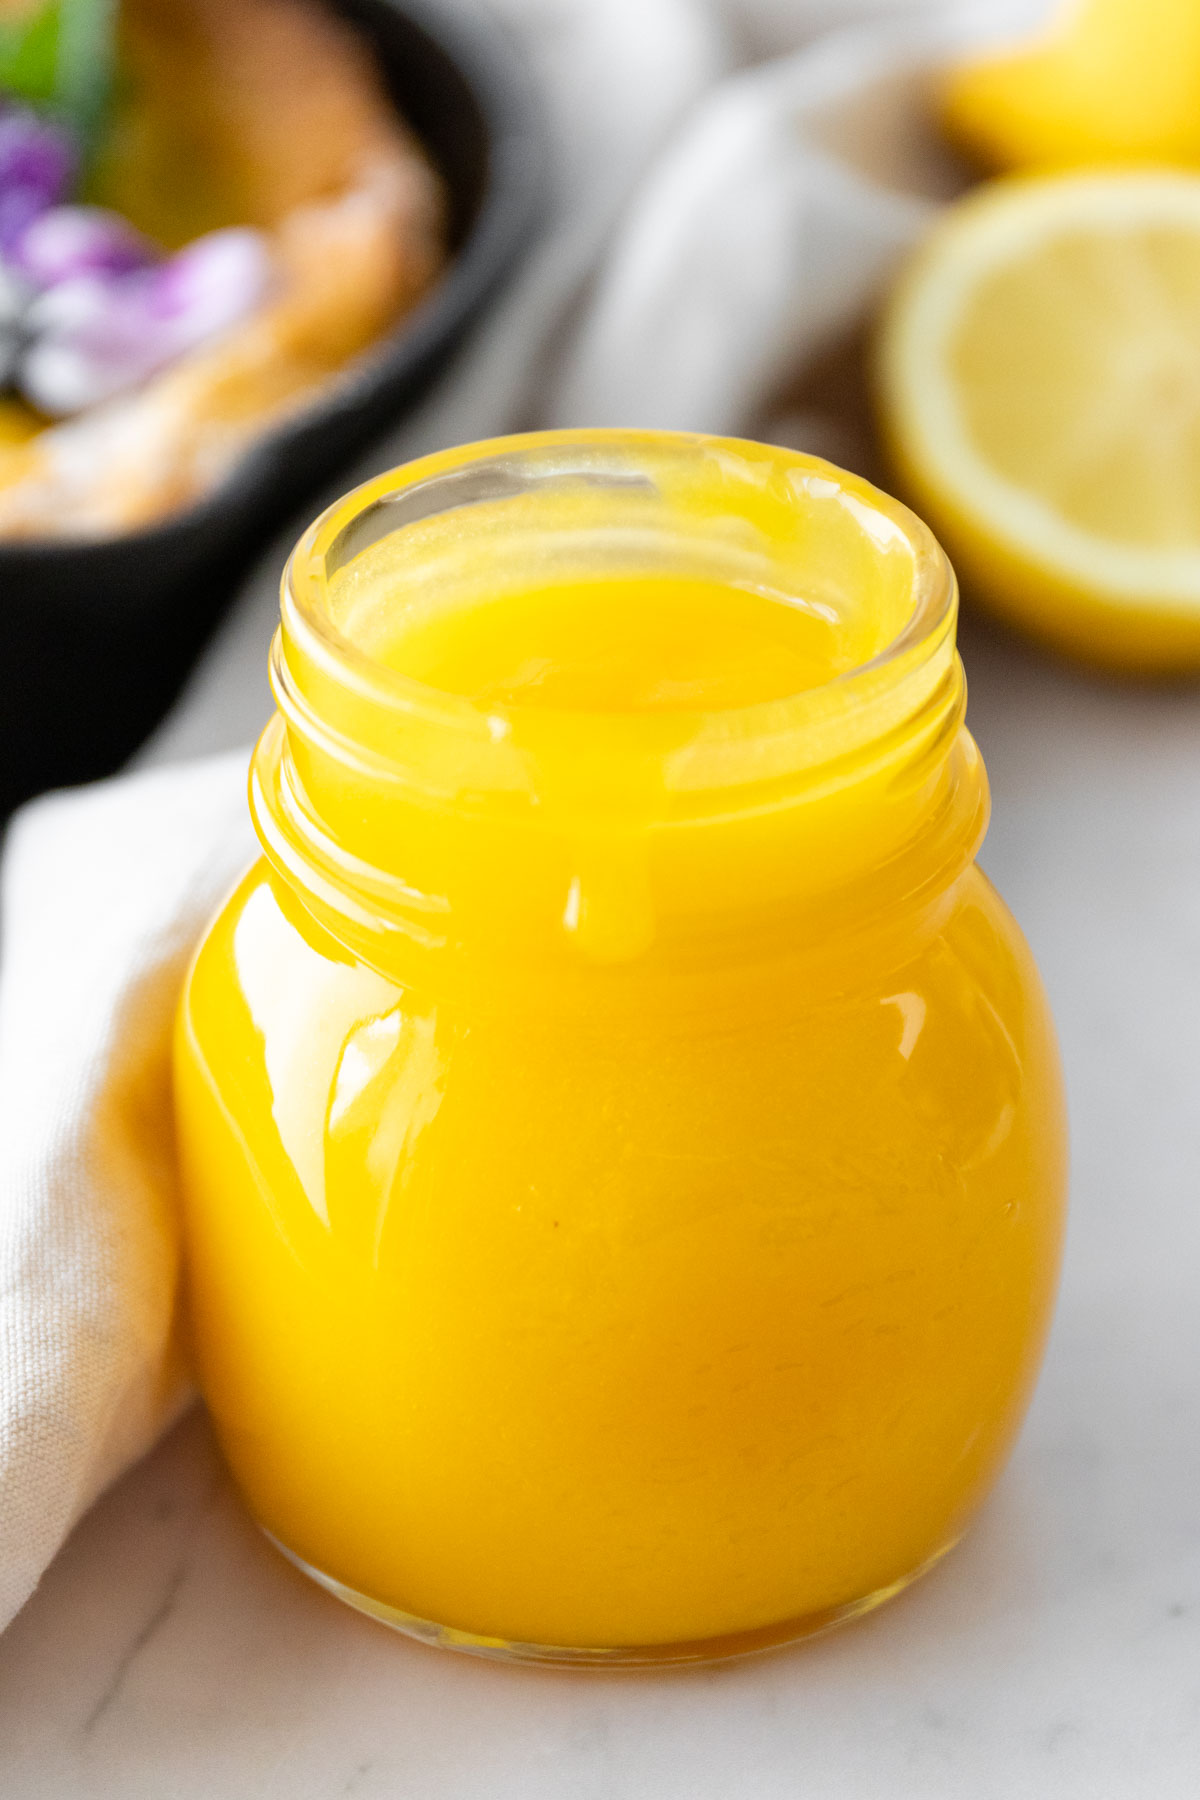 a small glass jar with lemon curd